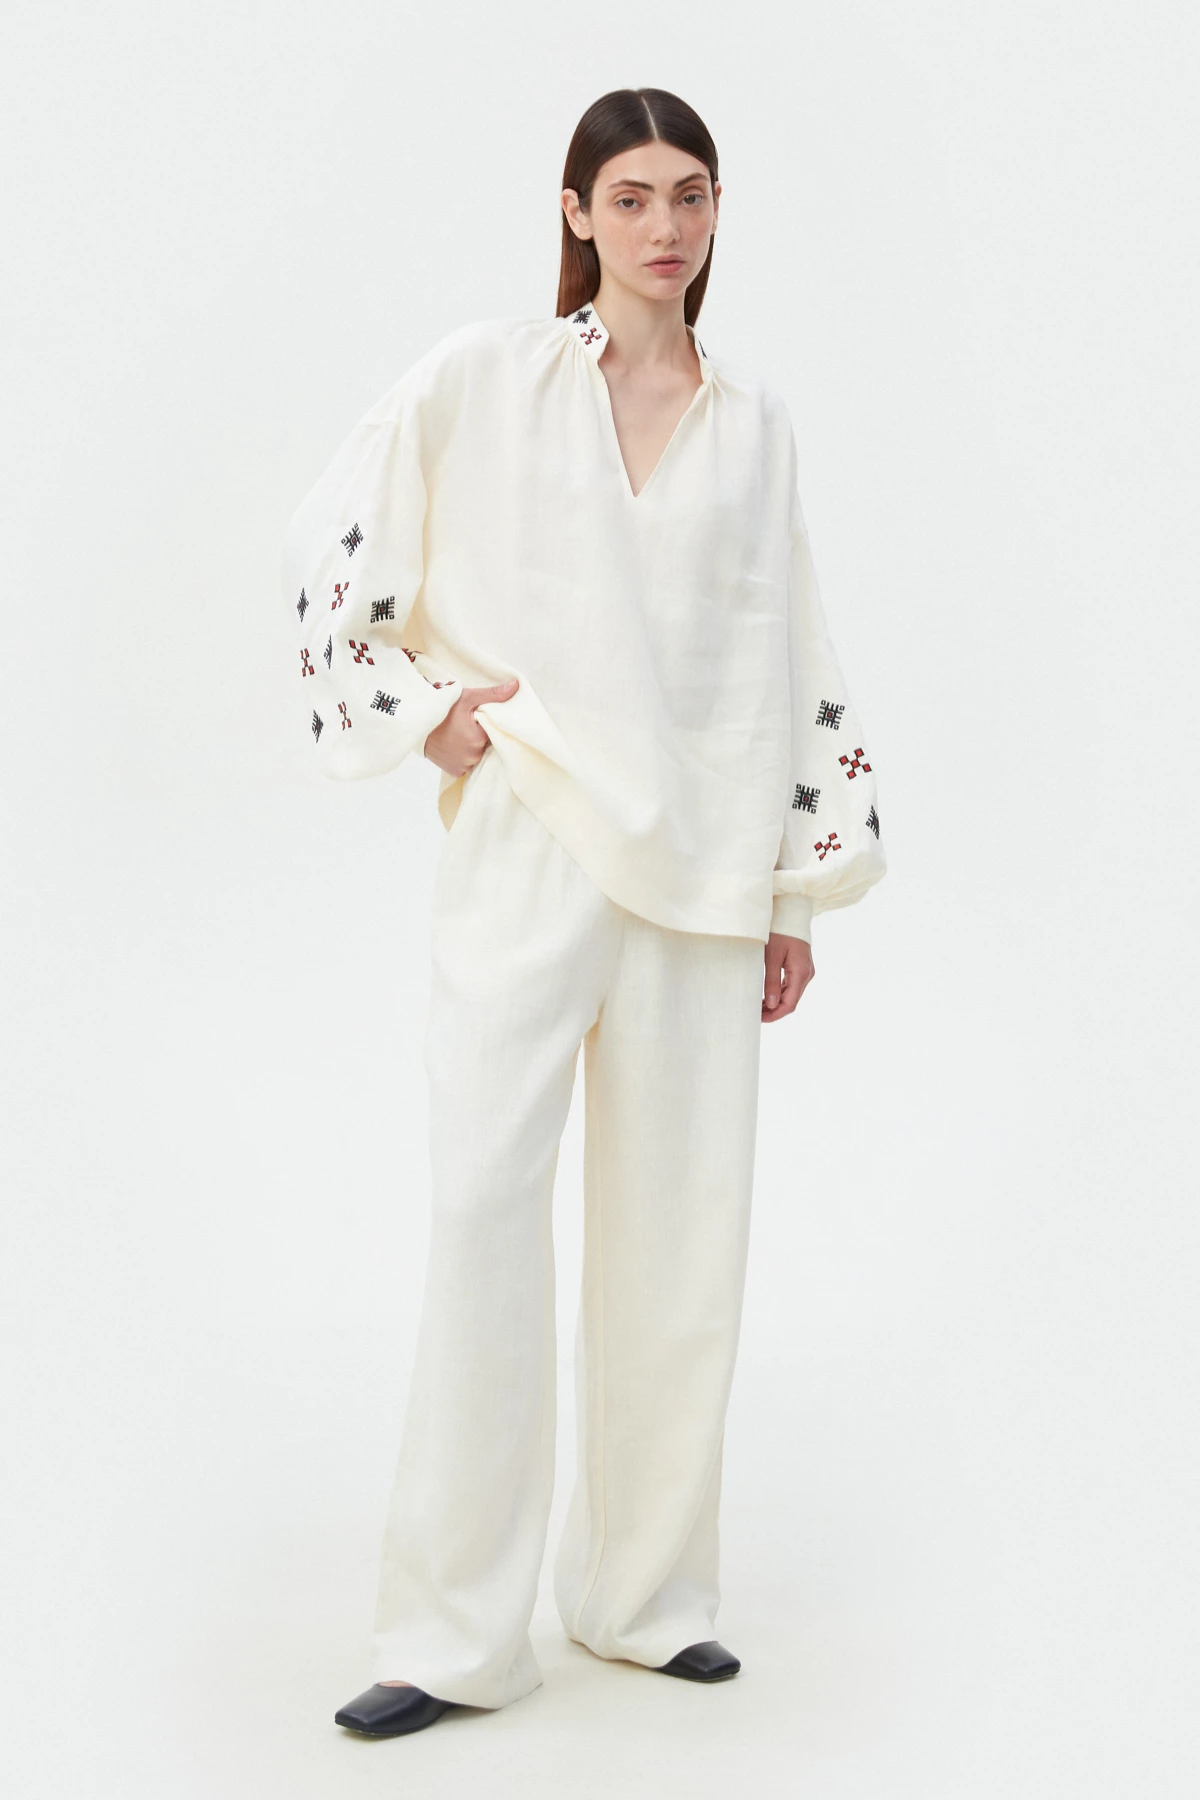 Milky linen vyshyvanka shirt with geometric embroidery, photo 2